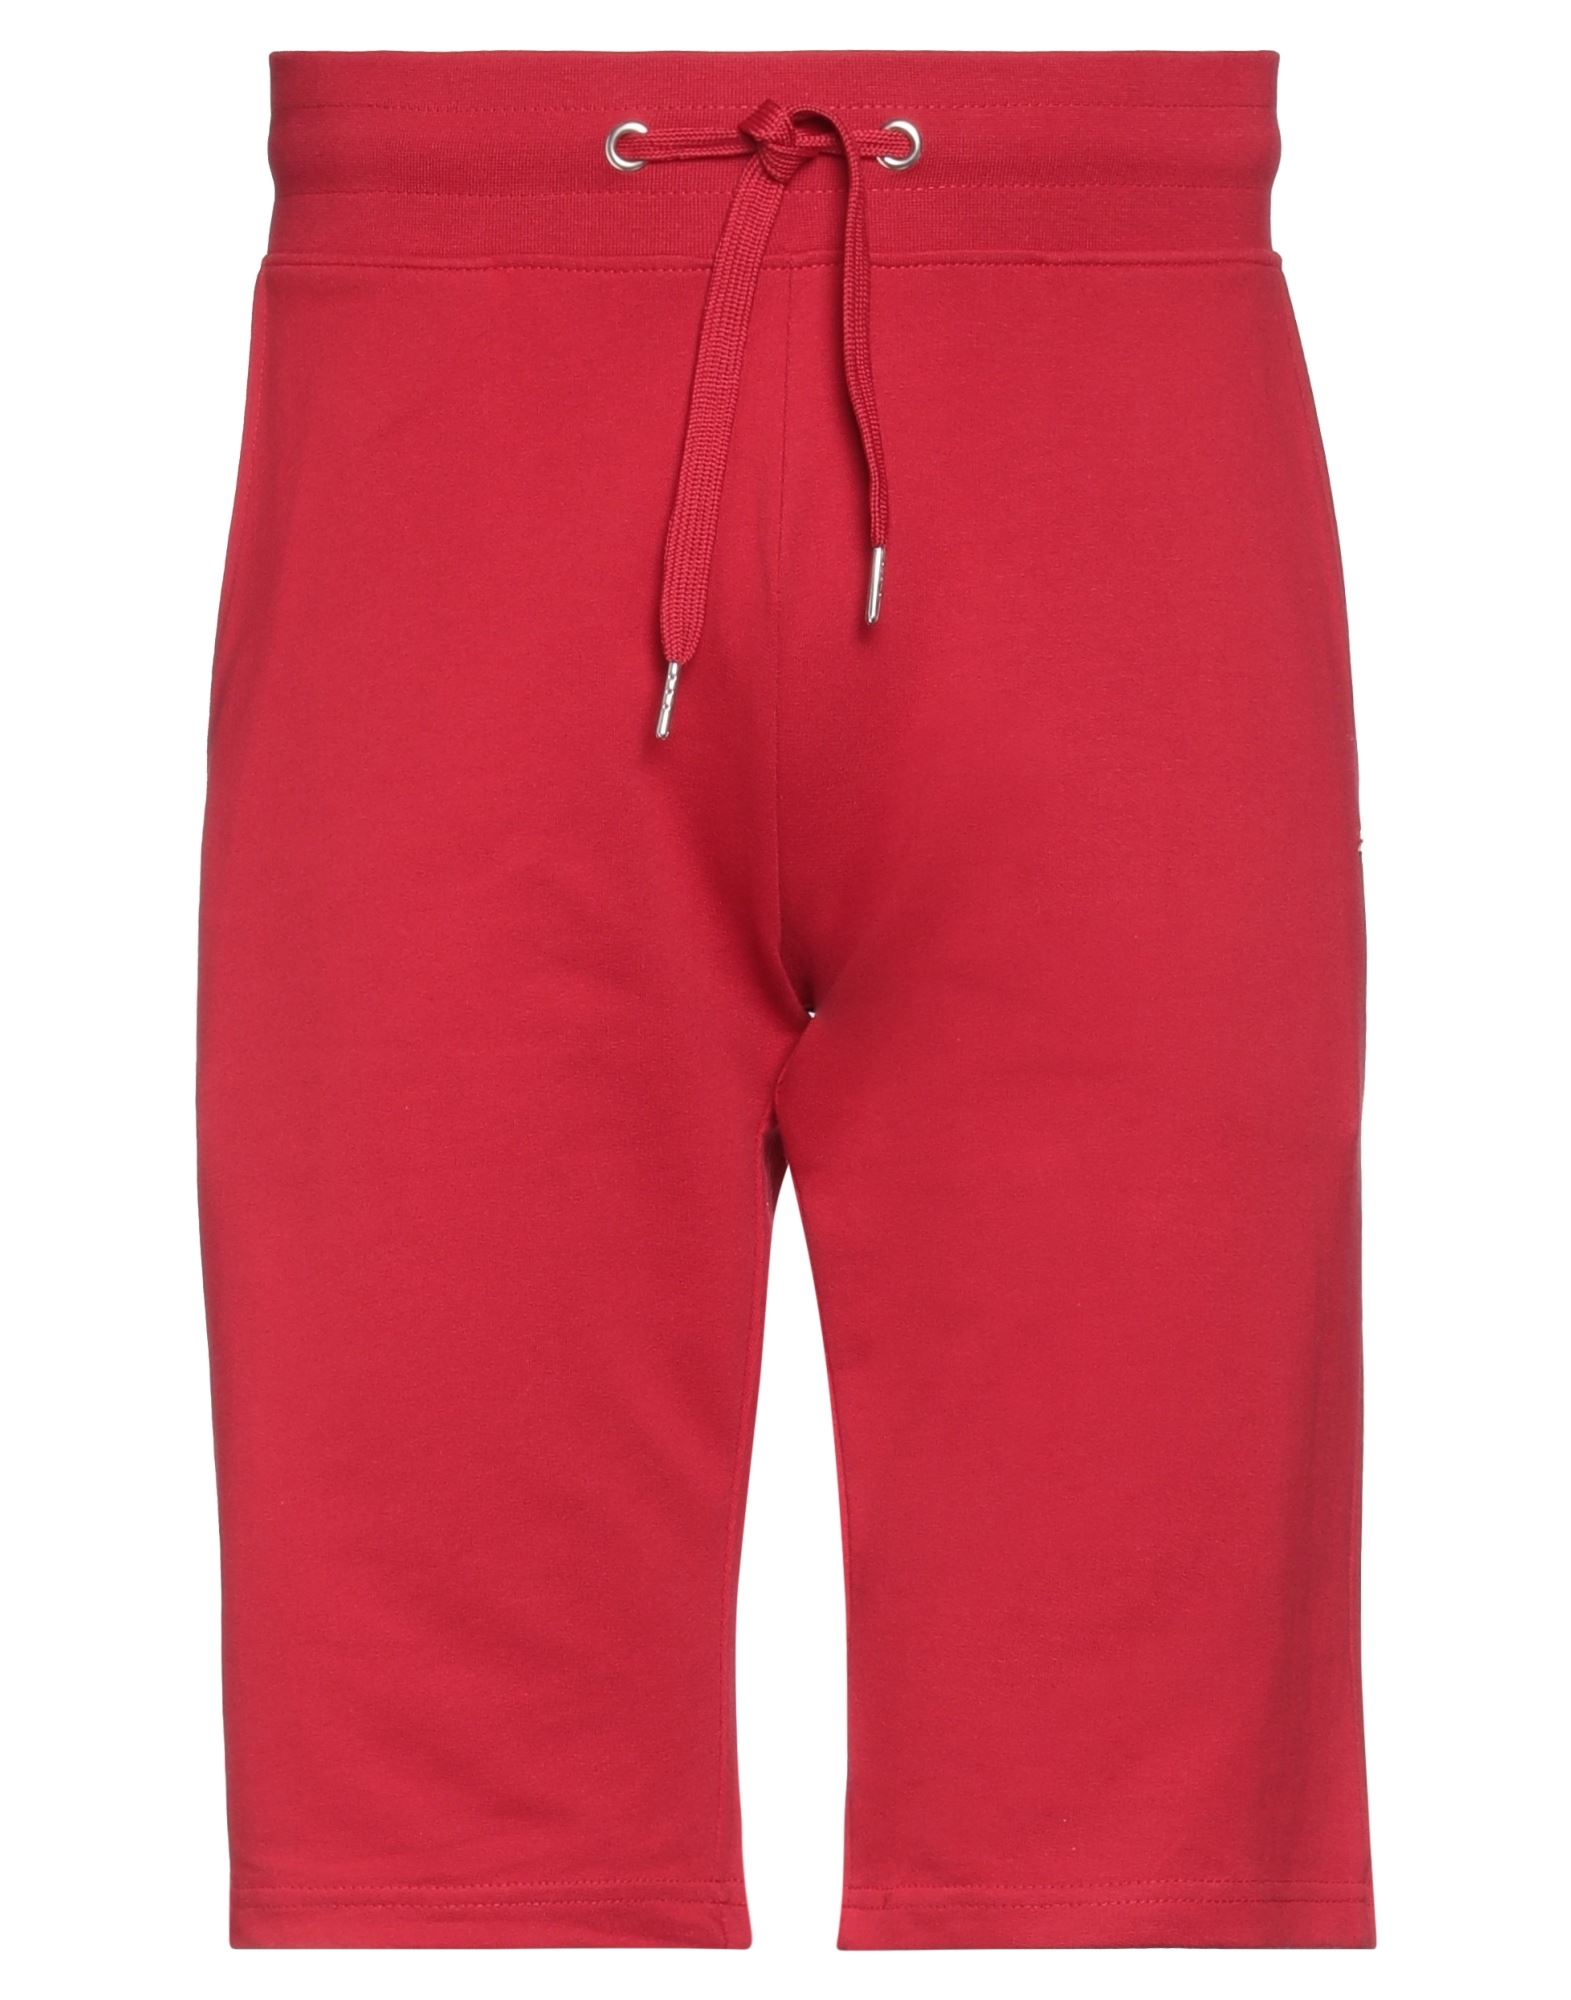 Markup Man Shorts & Bermuda Shorts Red Size Xl Cotton